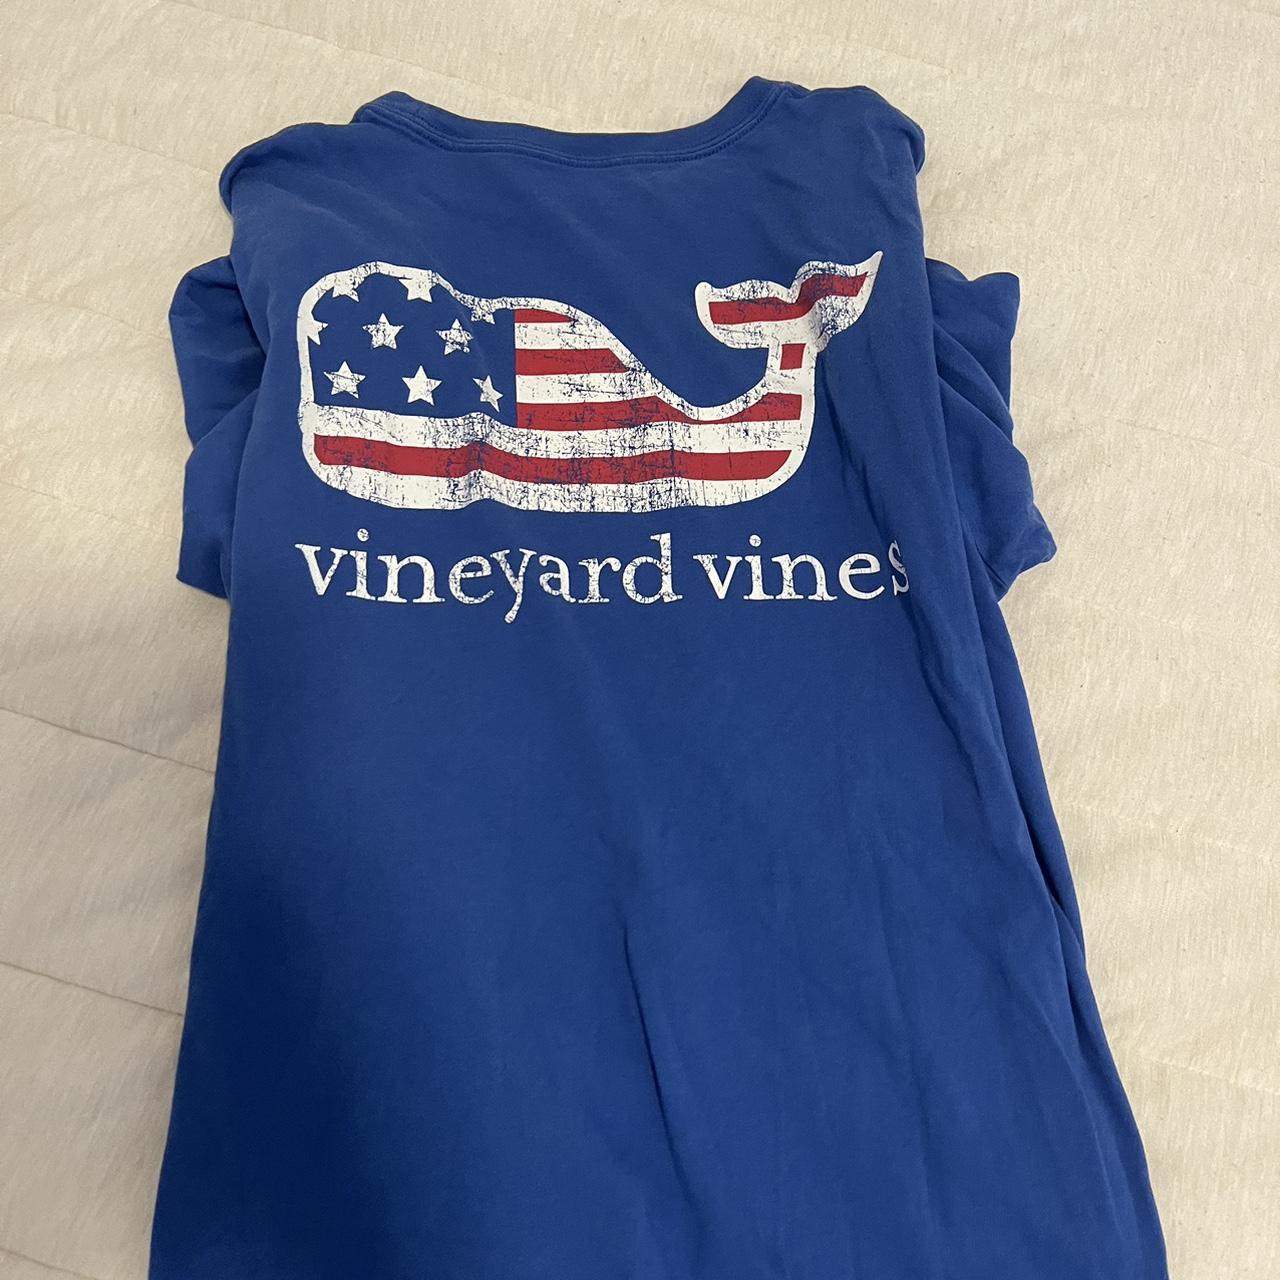 Vineyard vines T-shirt #vineyardvines #usa - Depop